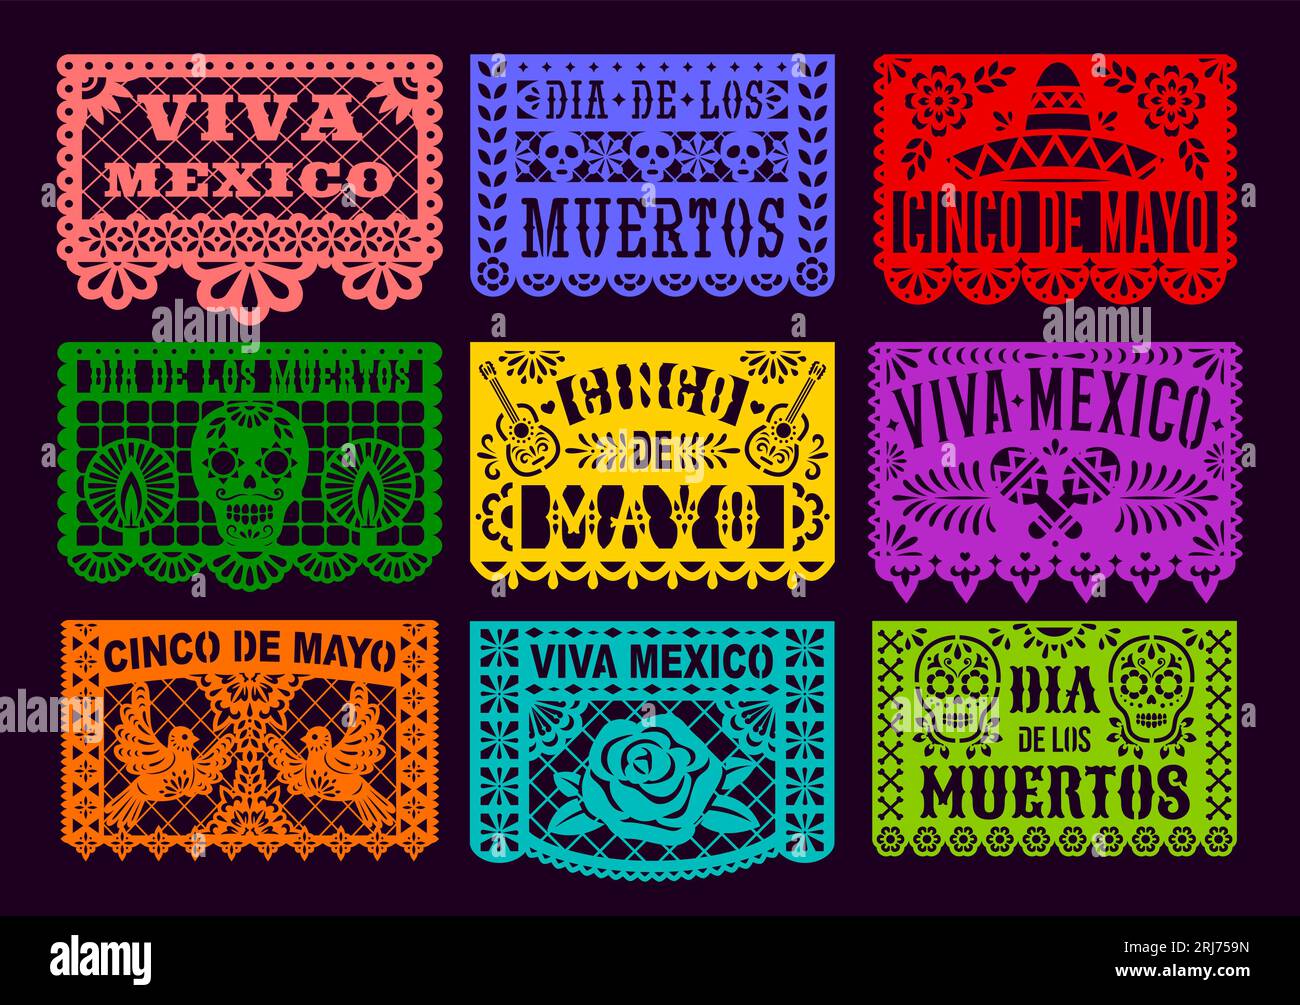 Alamo / Viva S.A. Plastic Picado Banner